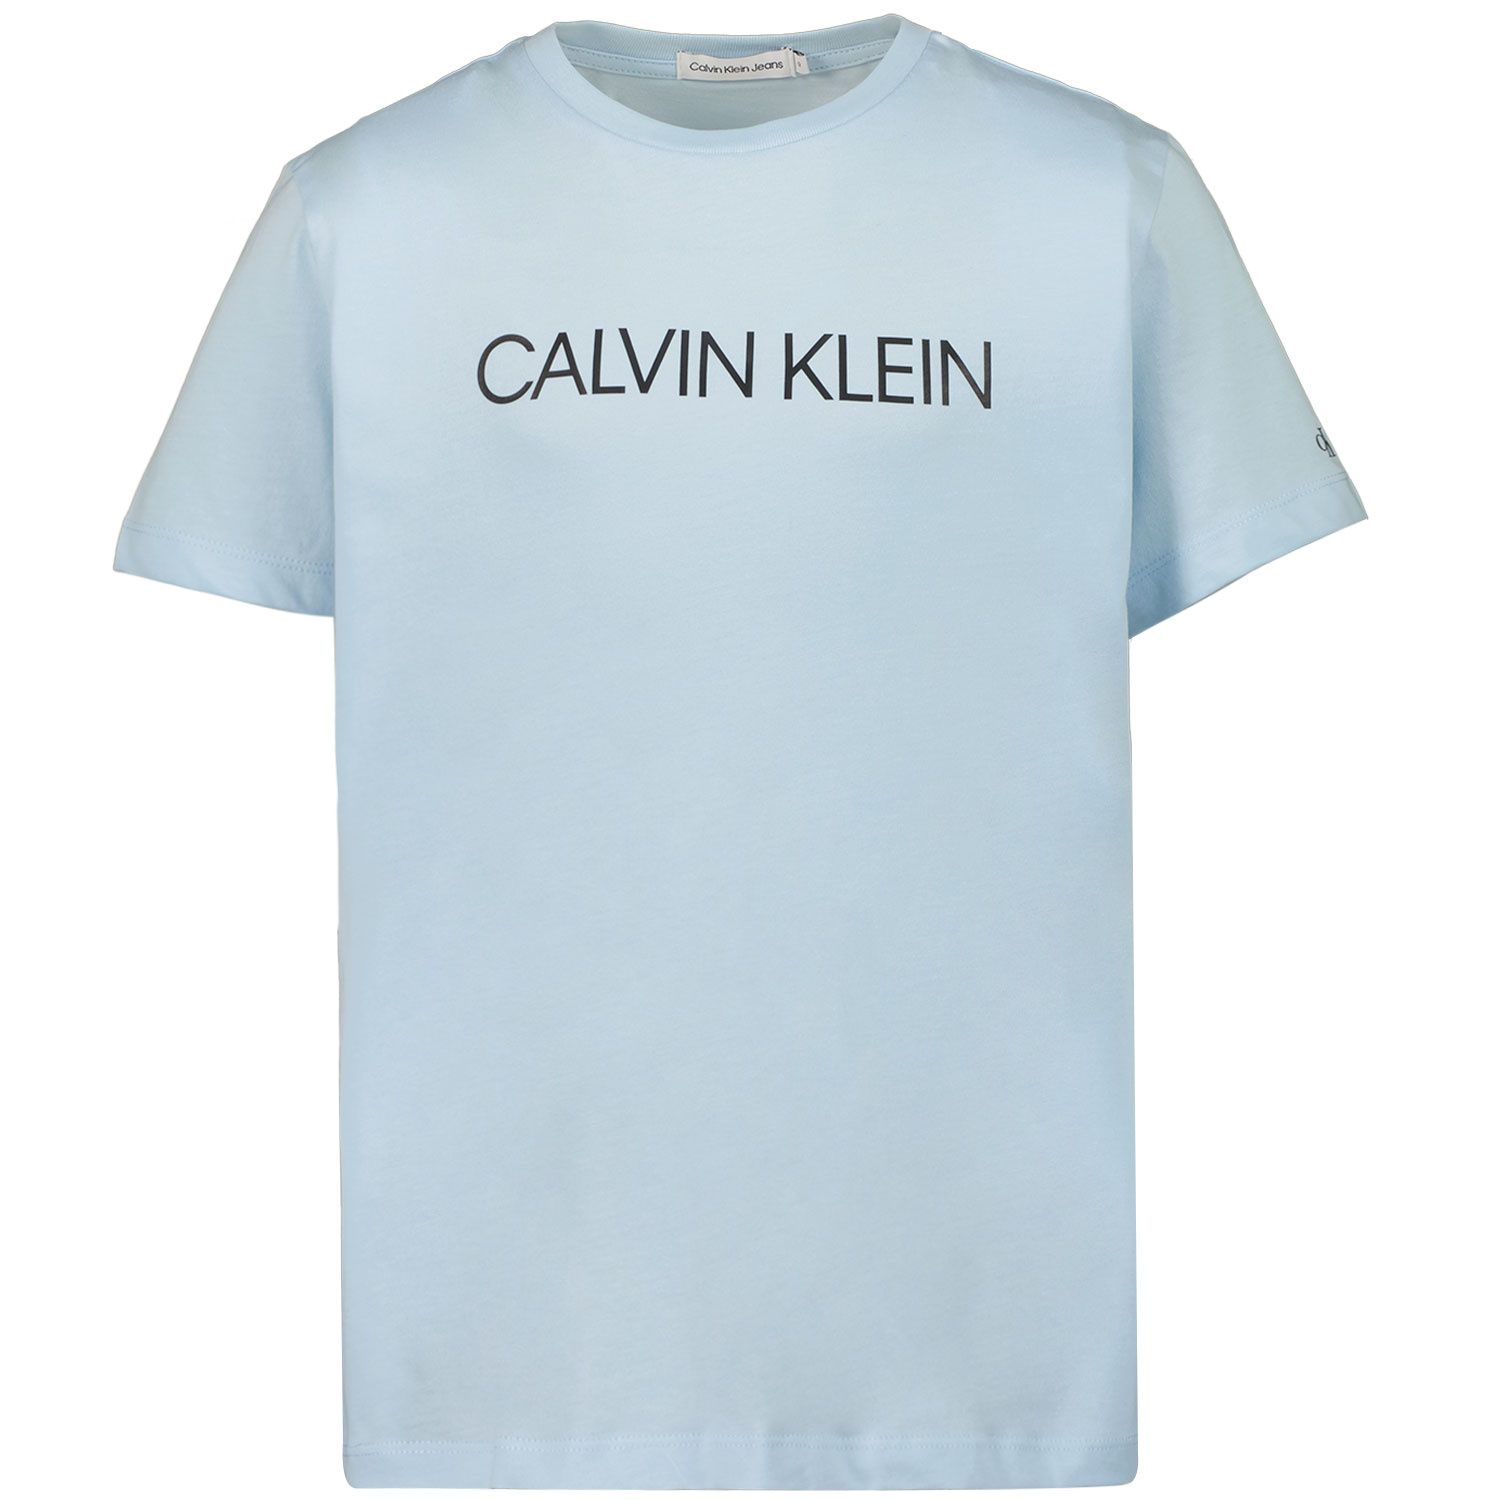 Picture of Calvin Klein IB0IB00347 kids t-shirt light blue